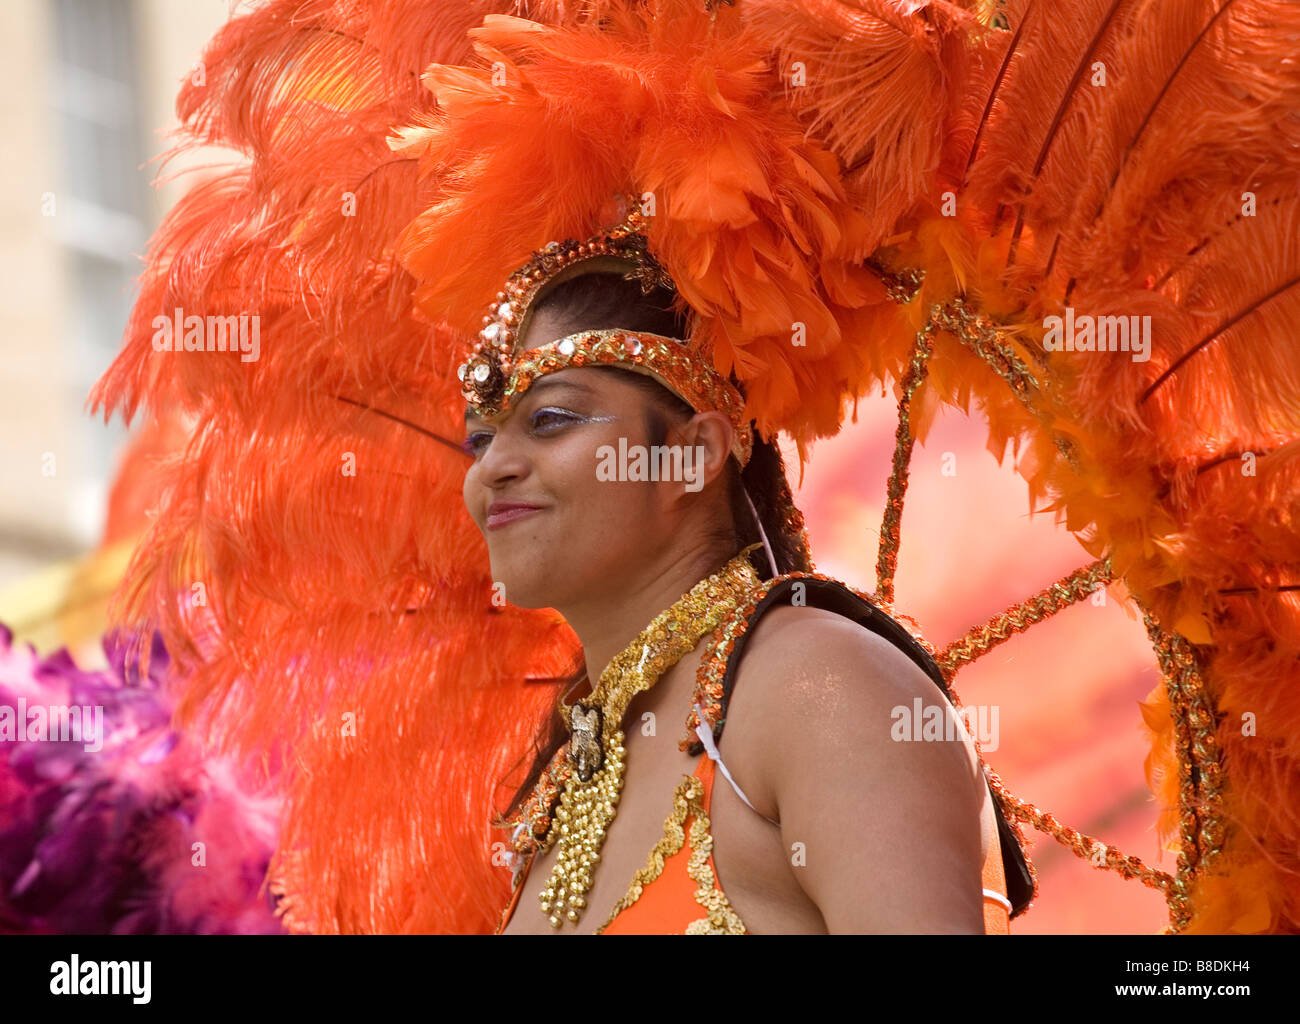 Woman wearing colourful costume at St Pauls Carnival, Bristol Stock Photo